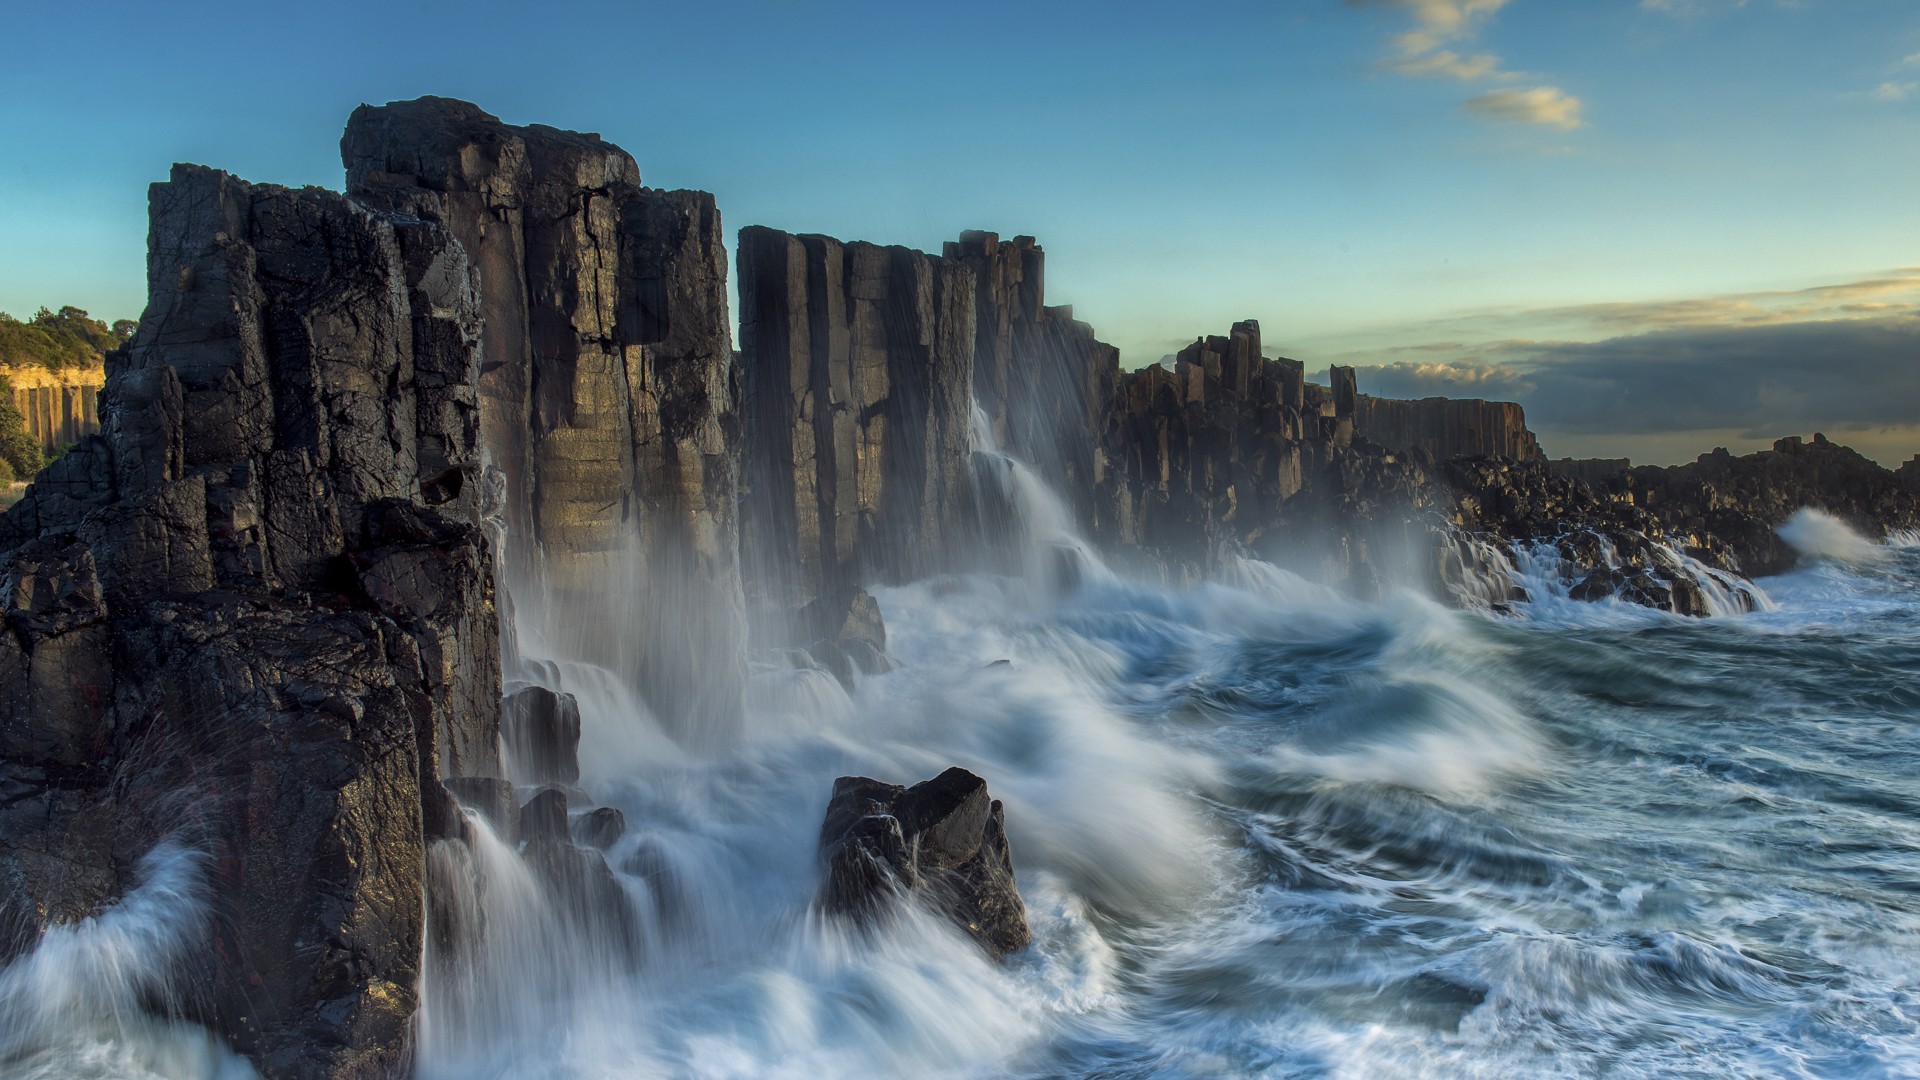 General 1920x1080 nature landscape sea waves coast long exposure cliff rocks clouds Australia rock formation